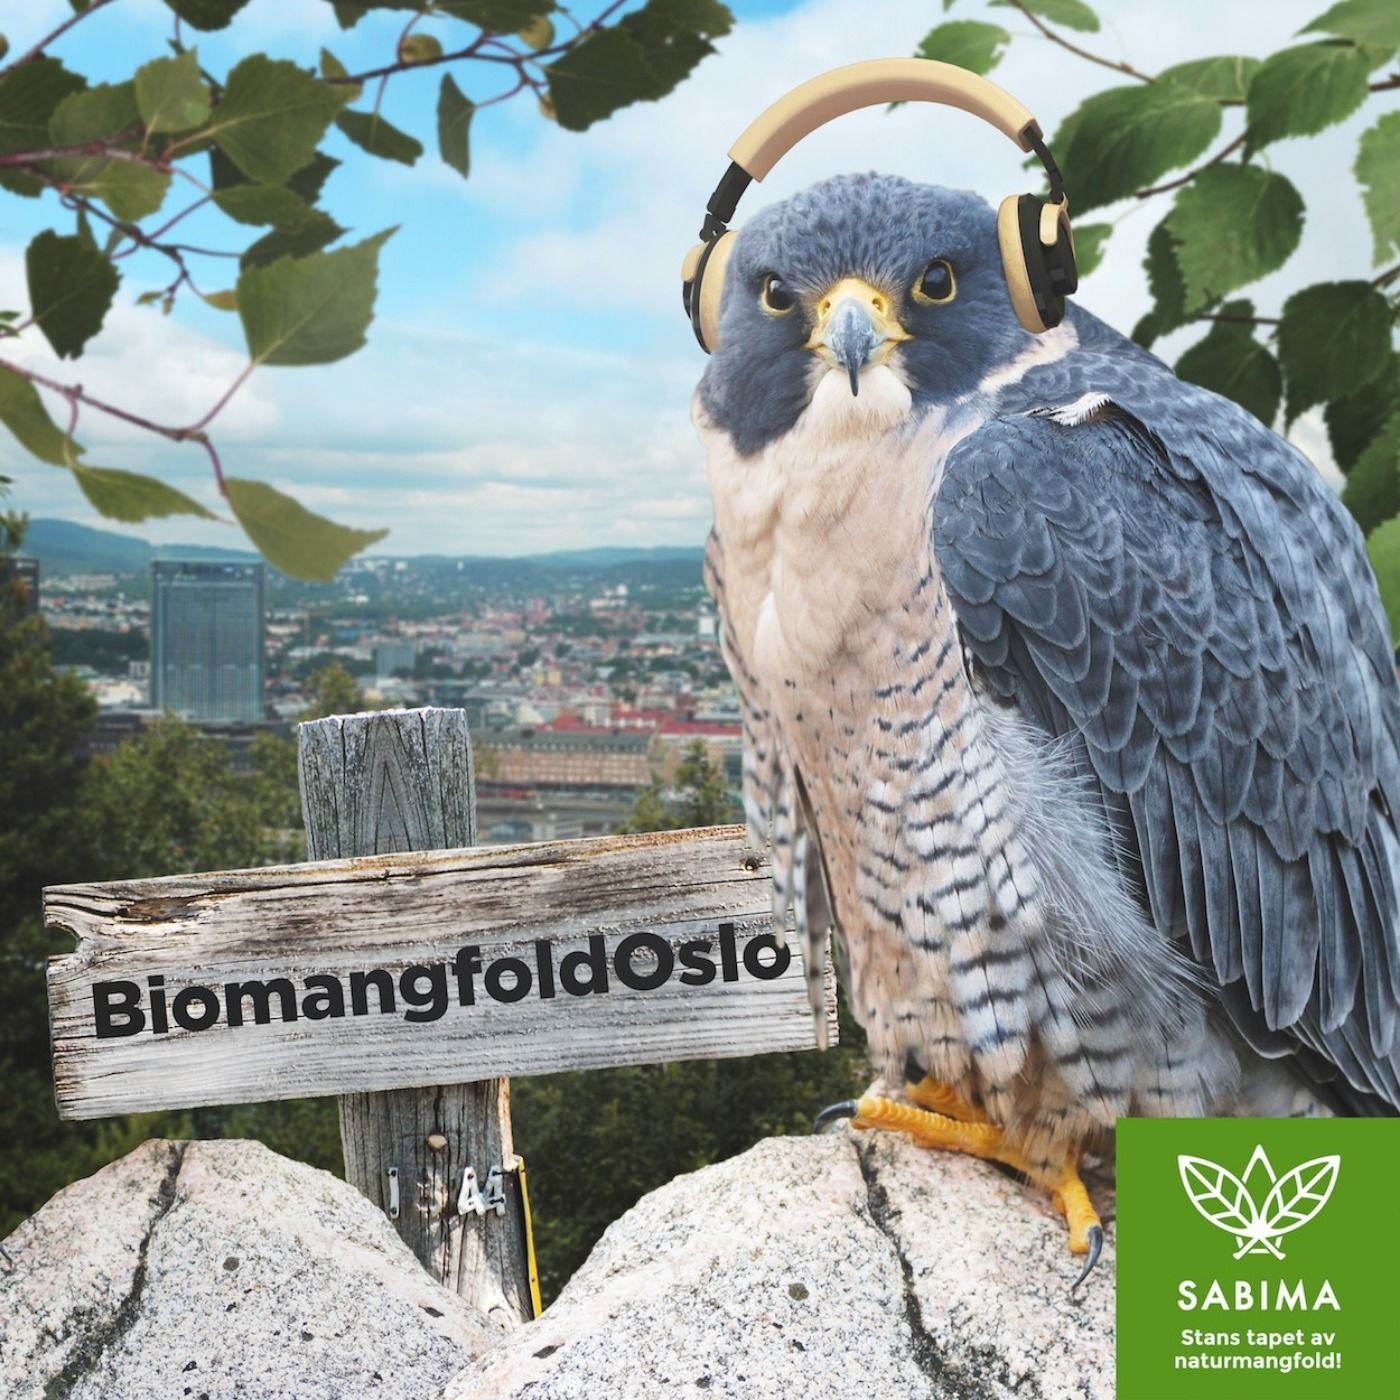 Biomangfold Oslo